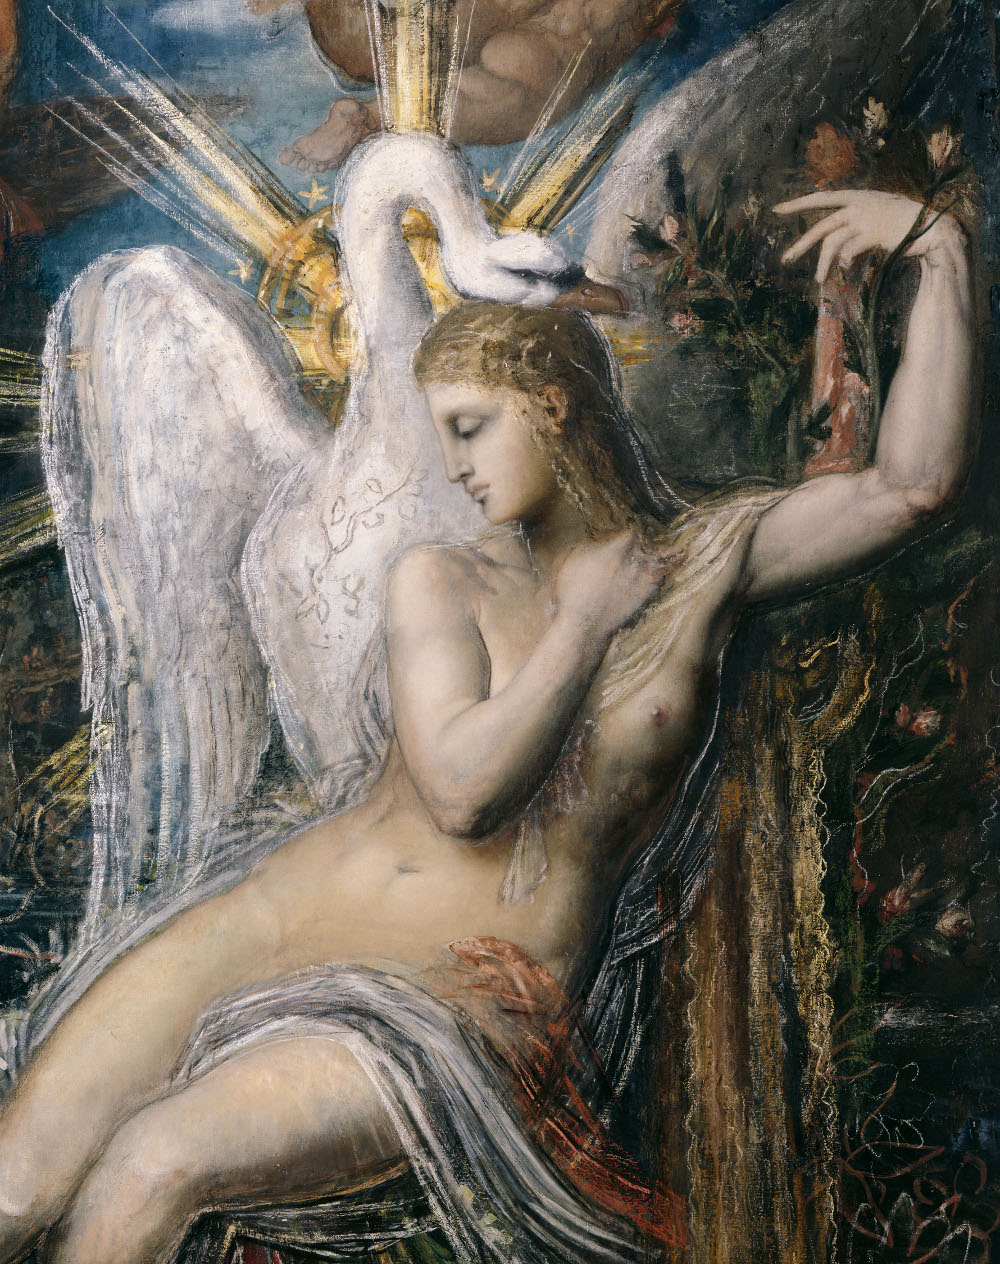 Gustave+Moreau-1826-1898 (51).jpg